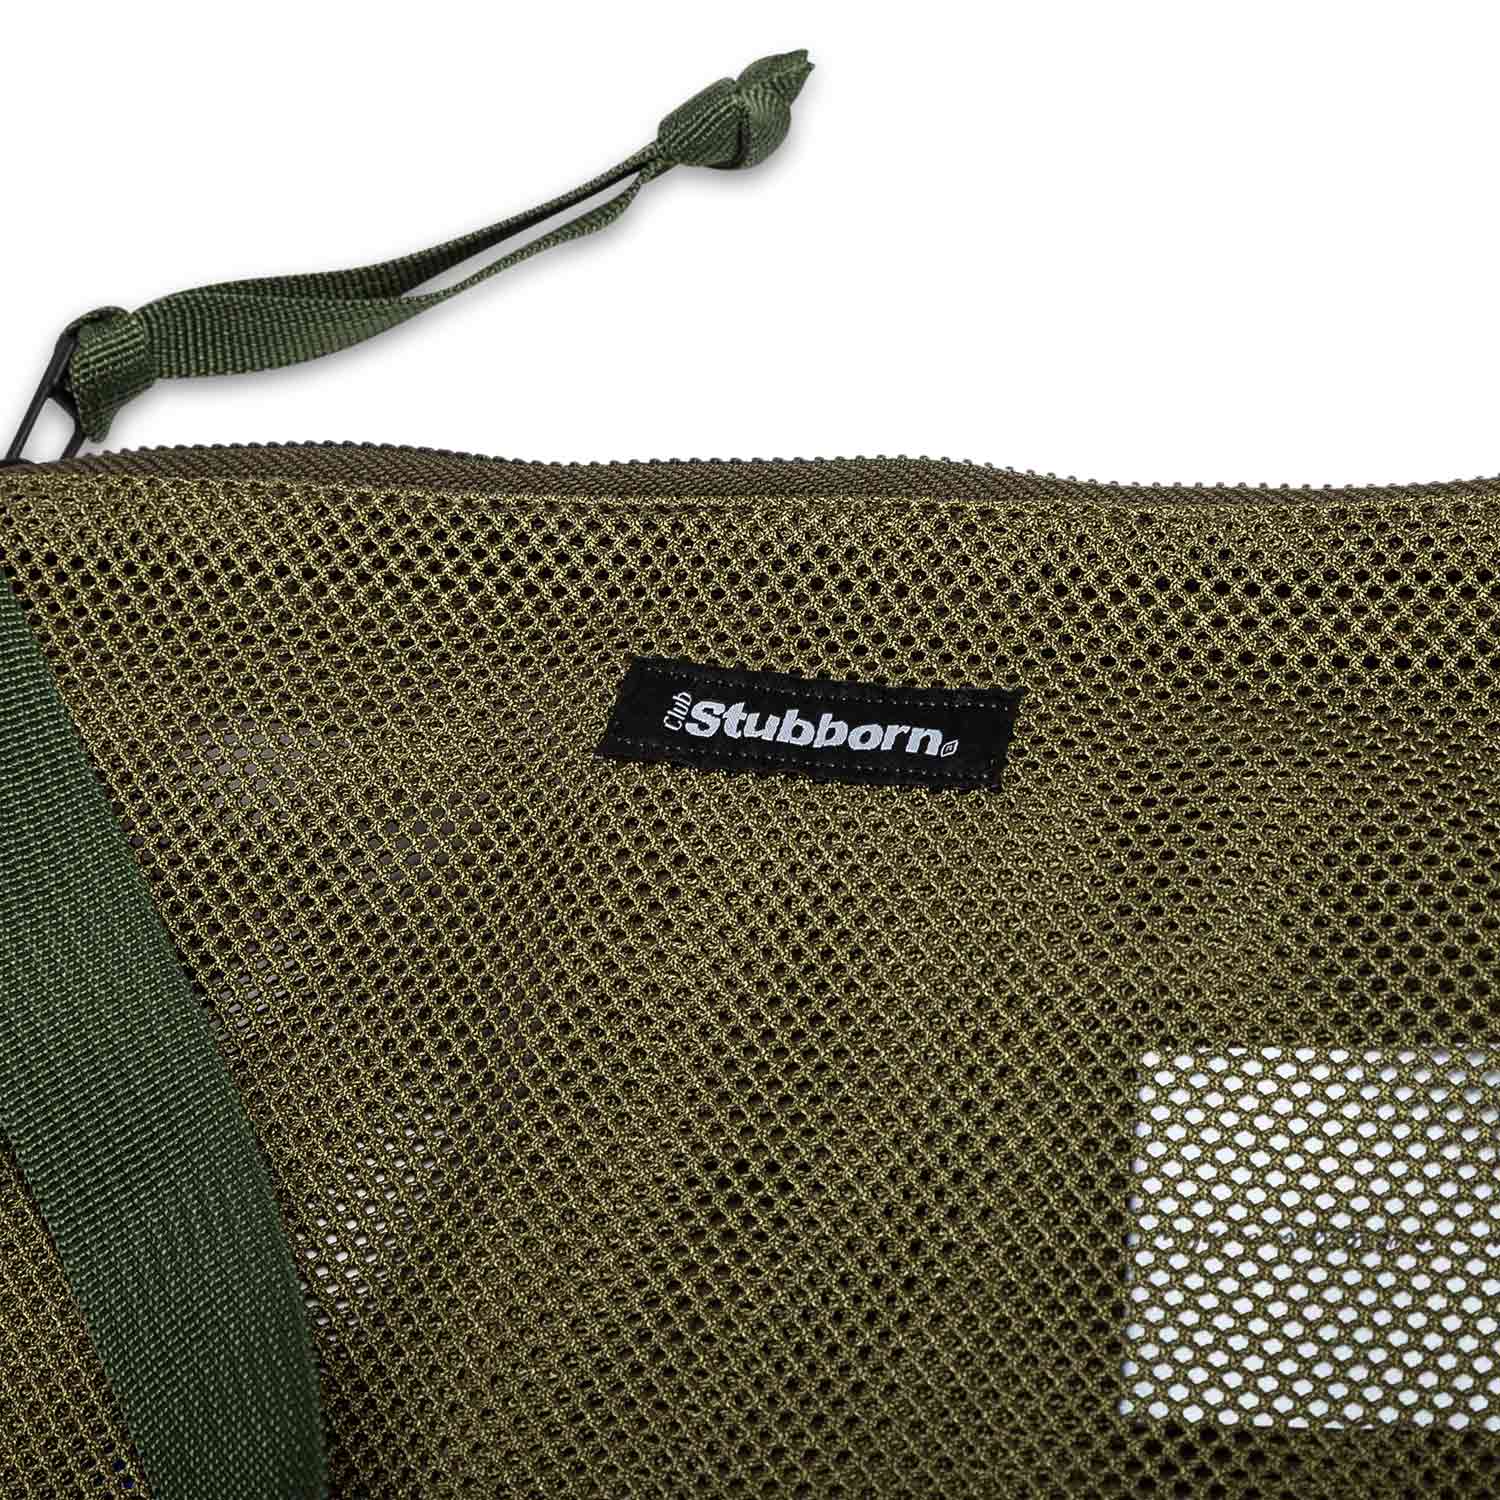 Club Stubborn Combat Shoulder Bag (Oliv)  - Cheap Witzenberg Jordan Outlet